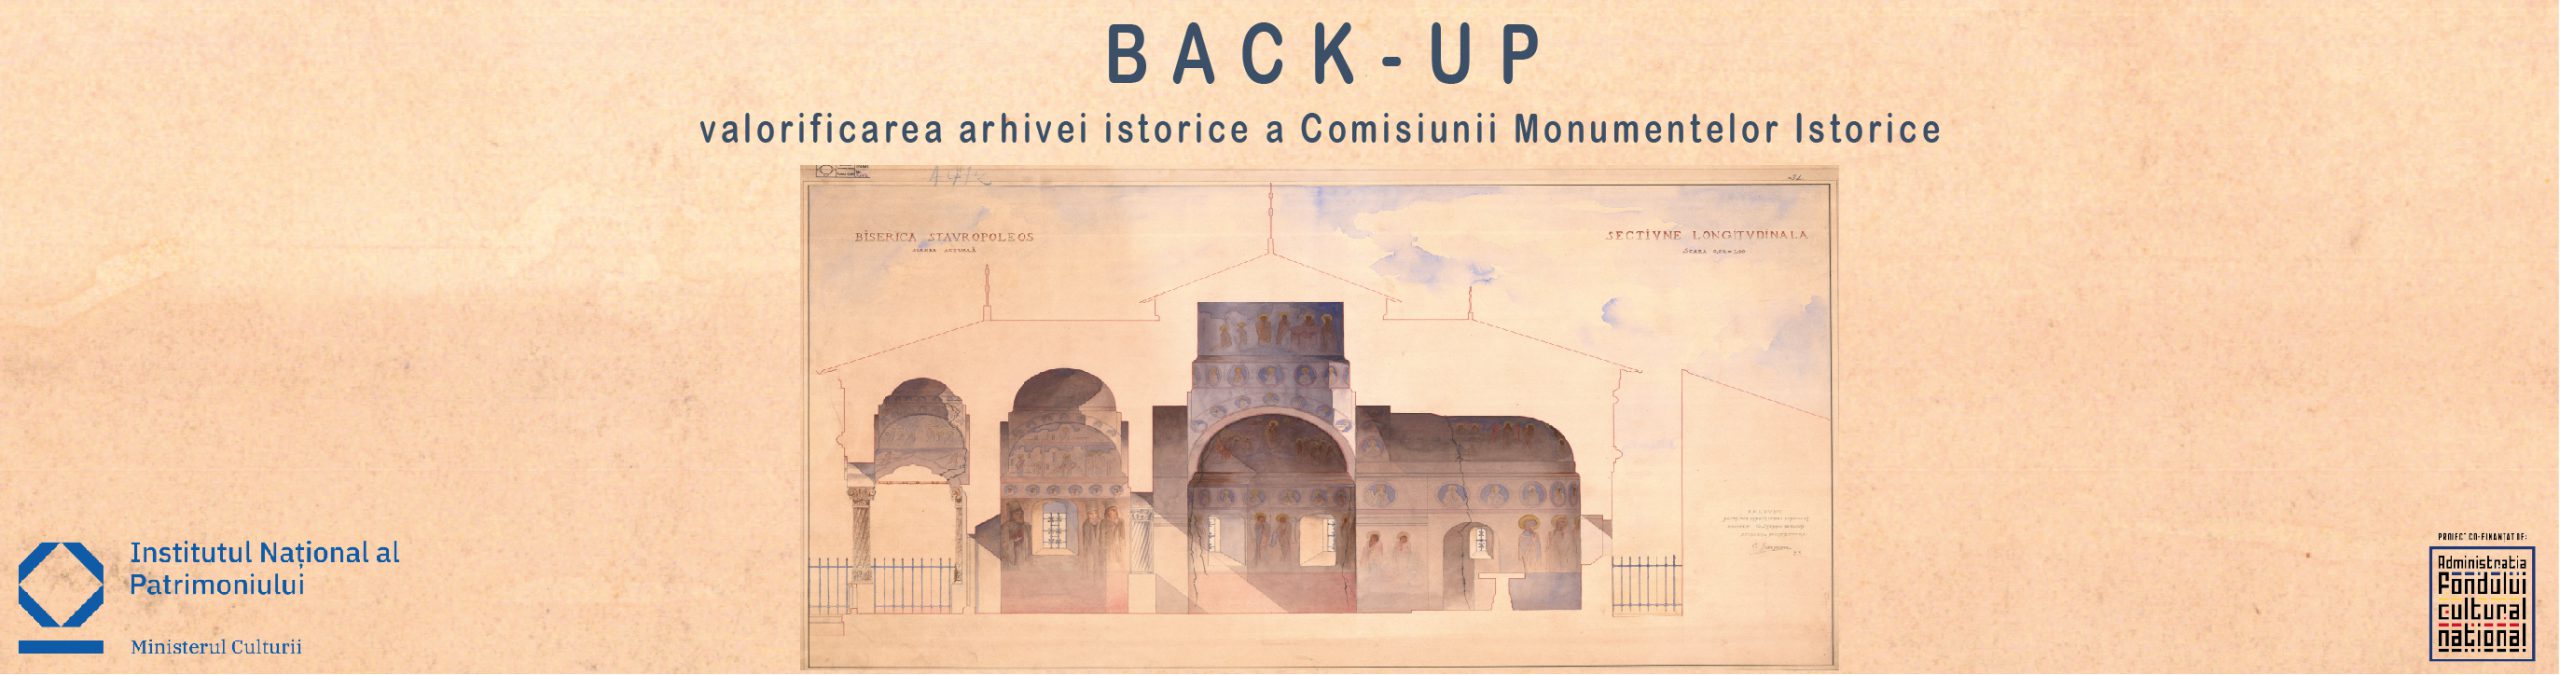 Back-up. Valorificarea arhivei istorice a Comisiunii Monumentelor Istorice